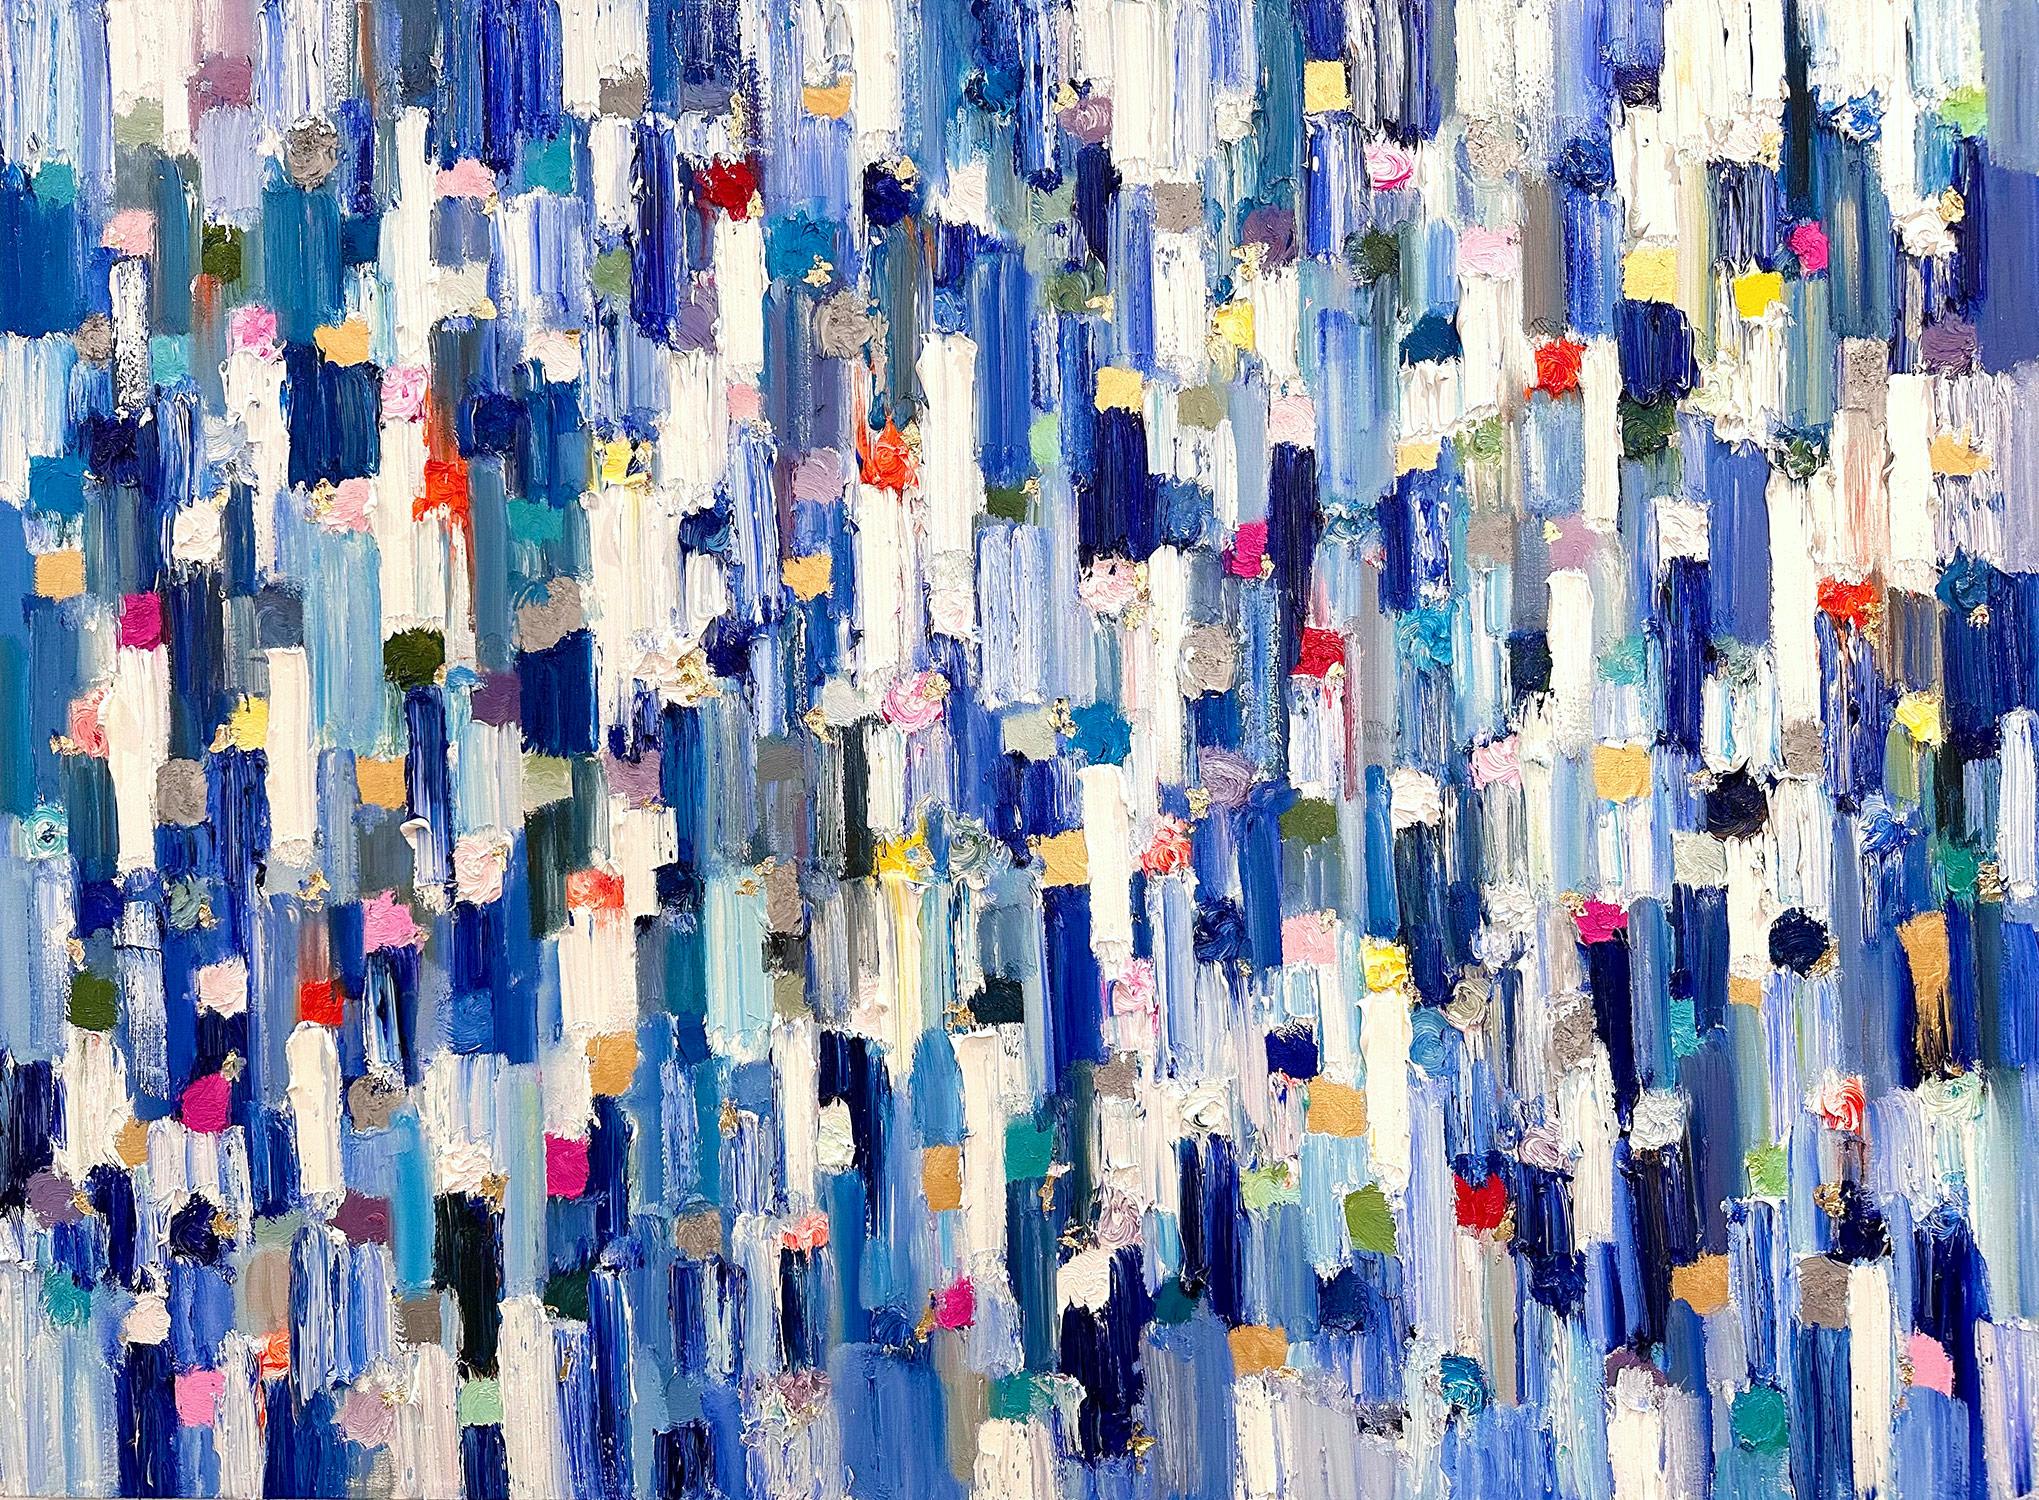 Abstract Painting Cindy Shaoul - "Dripping Dots - Porto Fino" Peinture à l'huile contemporaine multicolore sur toile